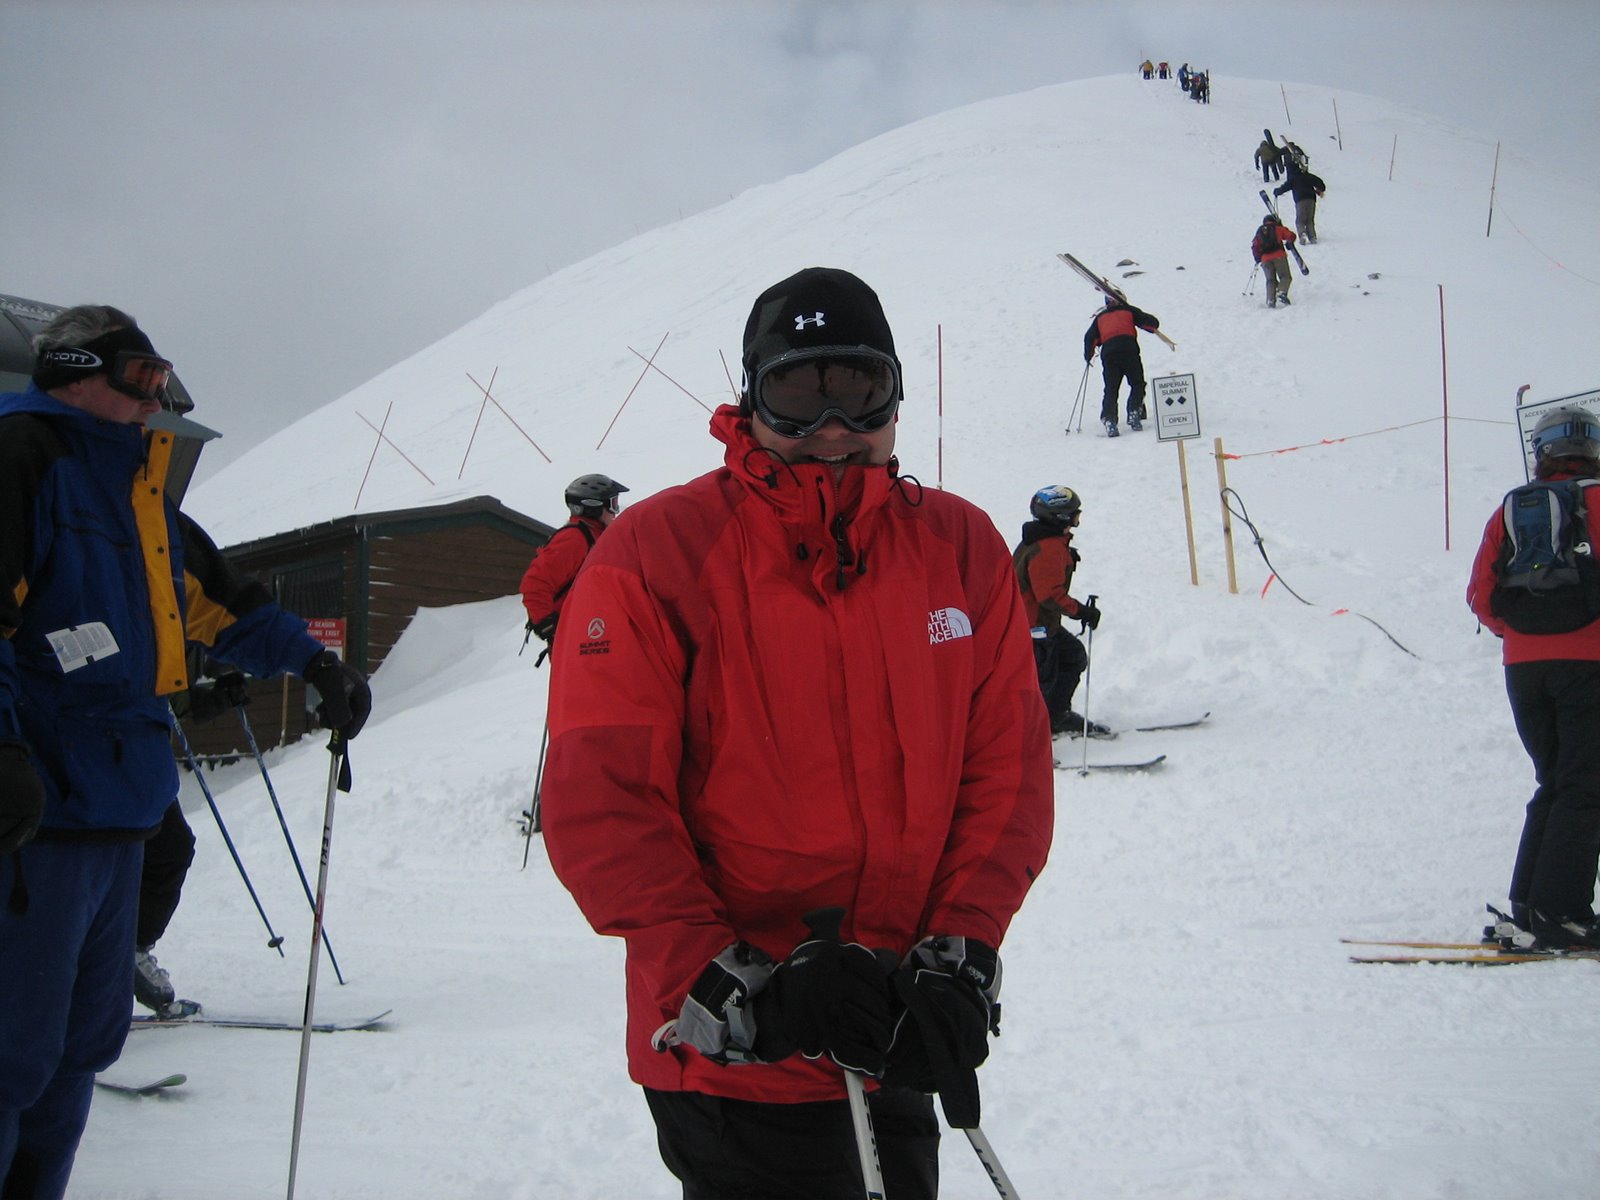 [Mike+on+ski+trip+'08.JPG]